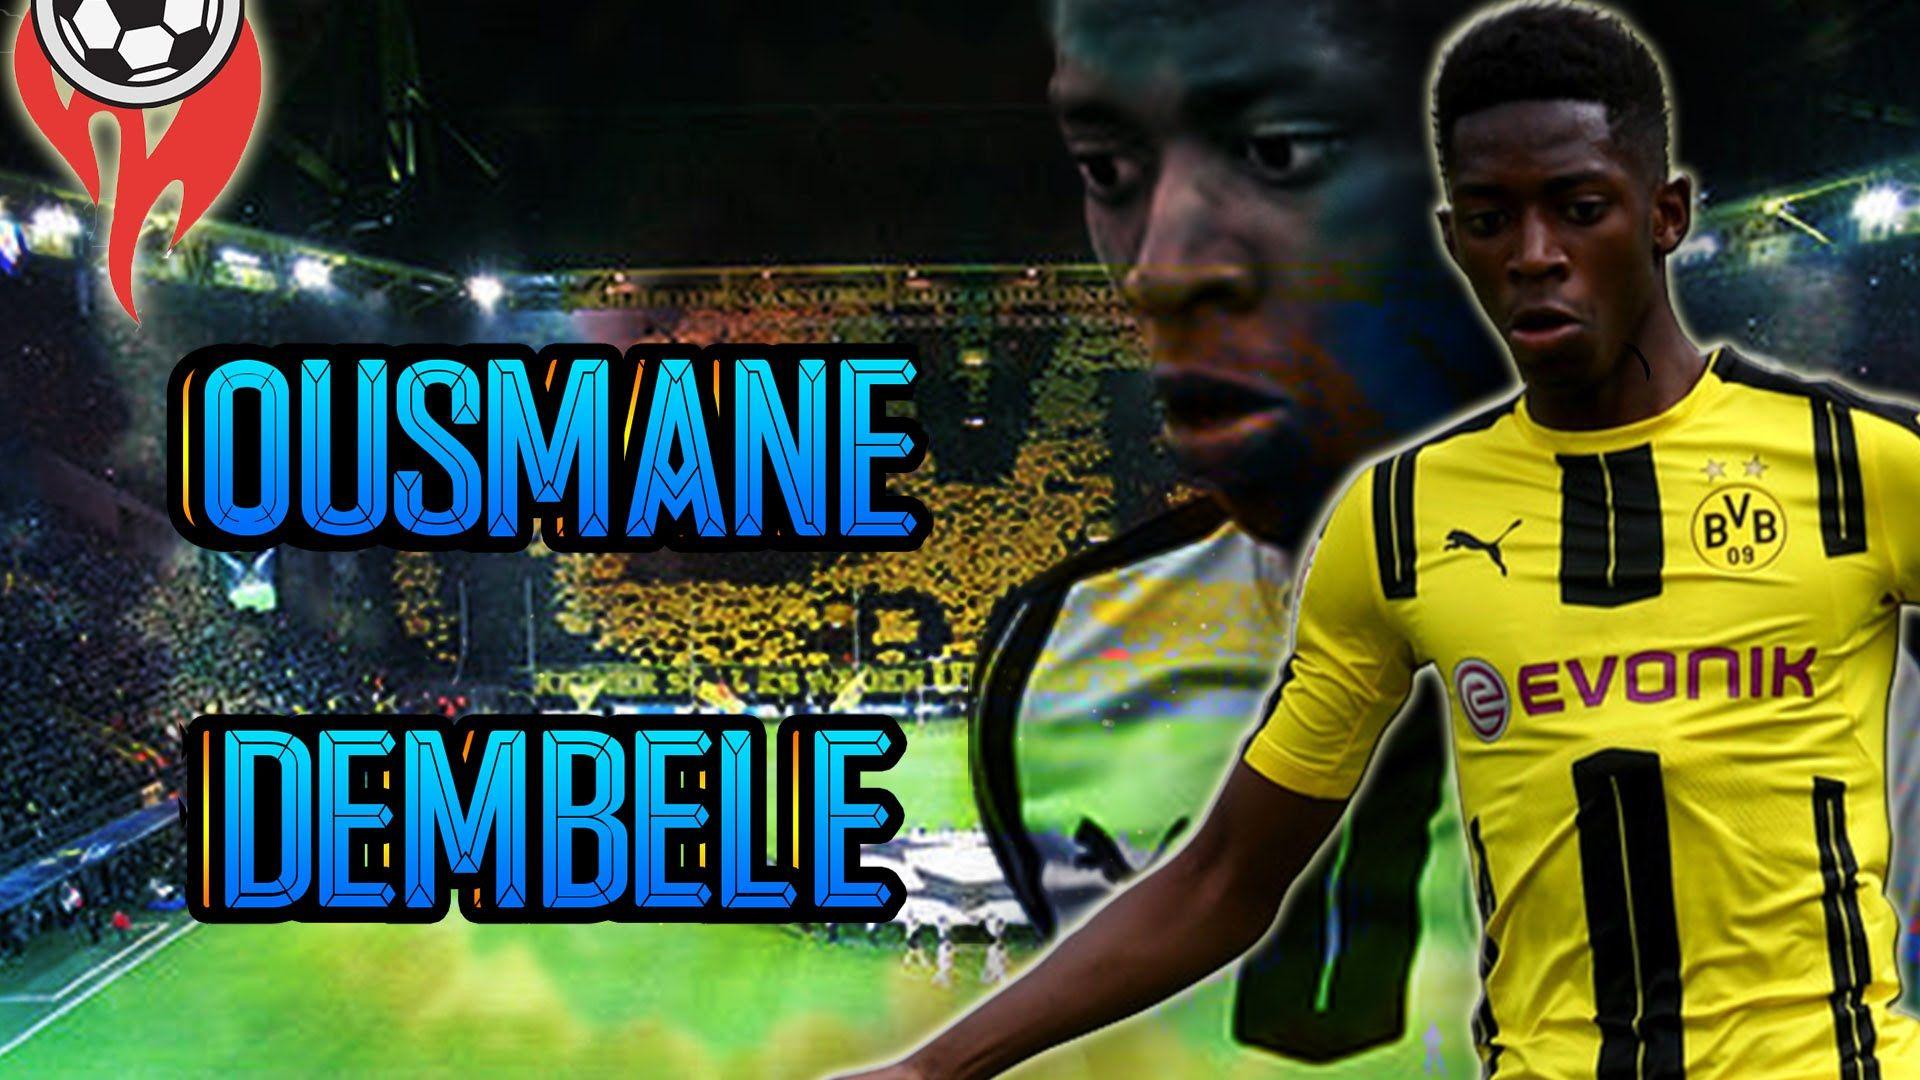 Ousmane Dembele